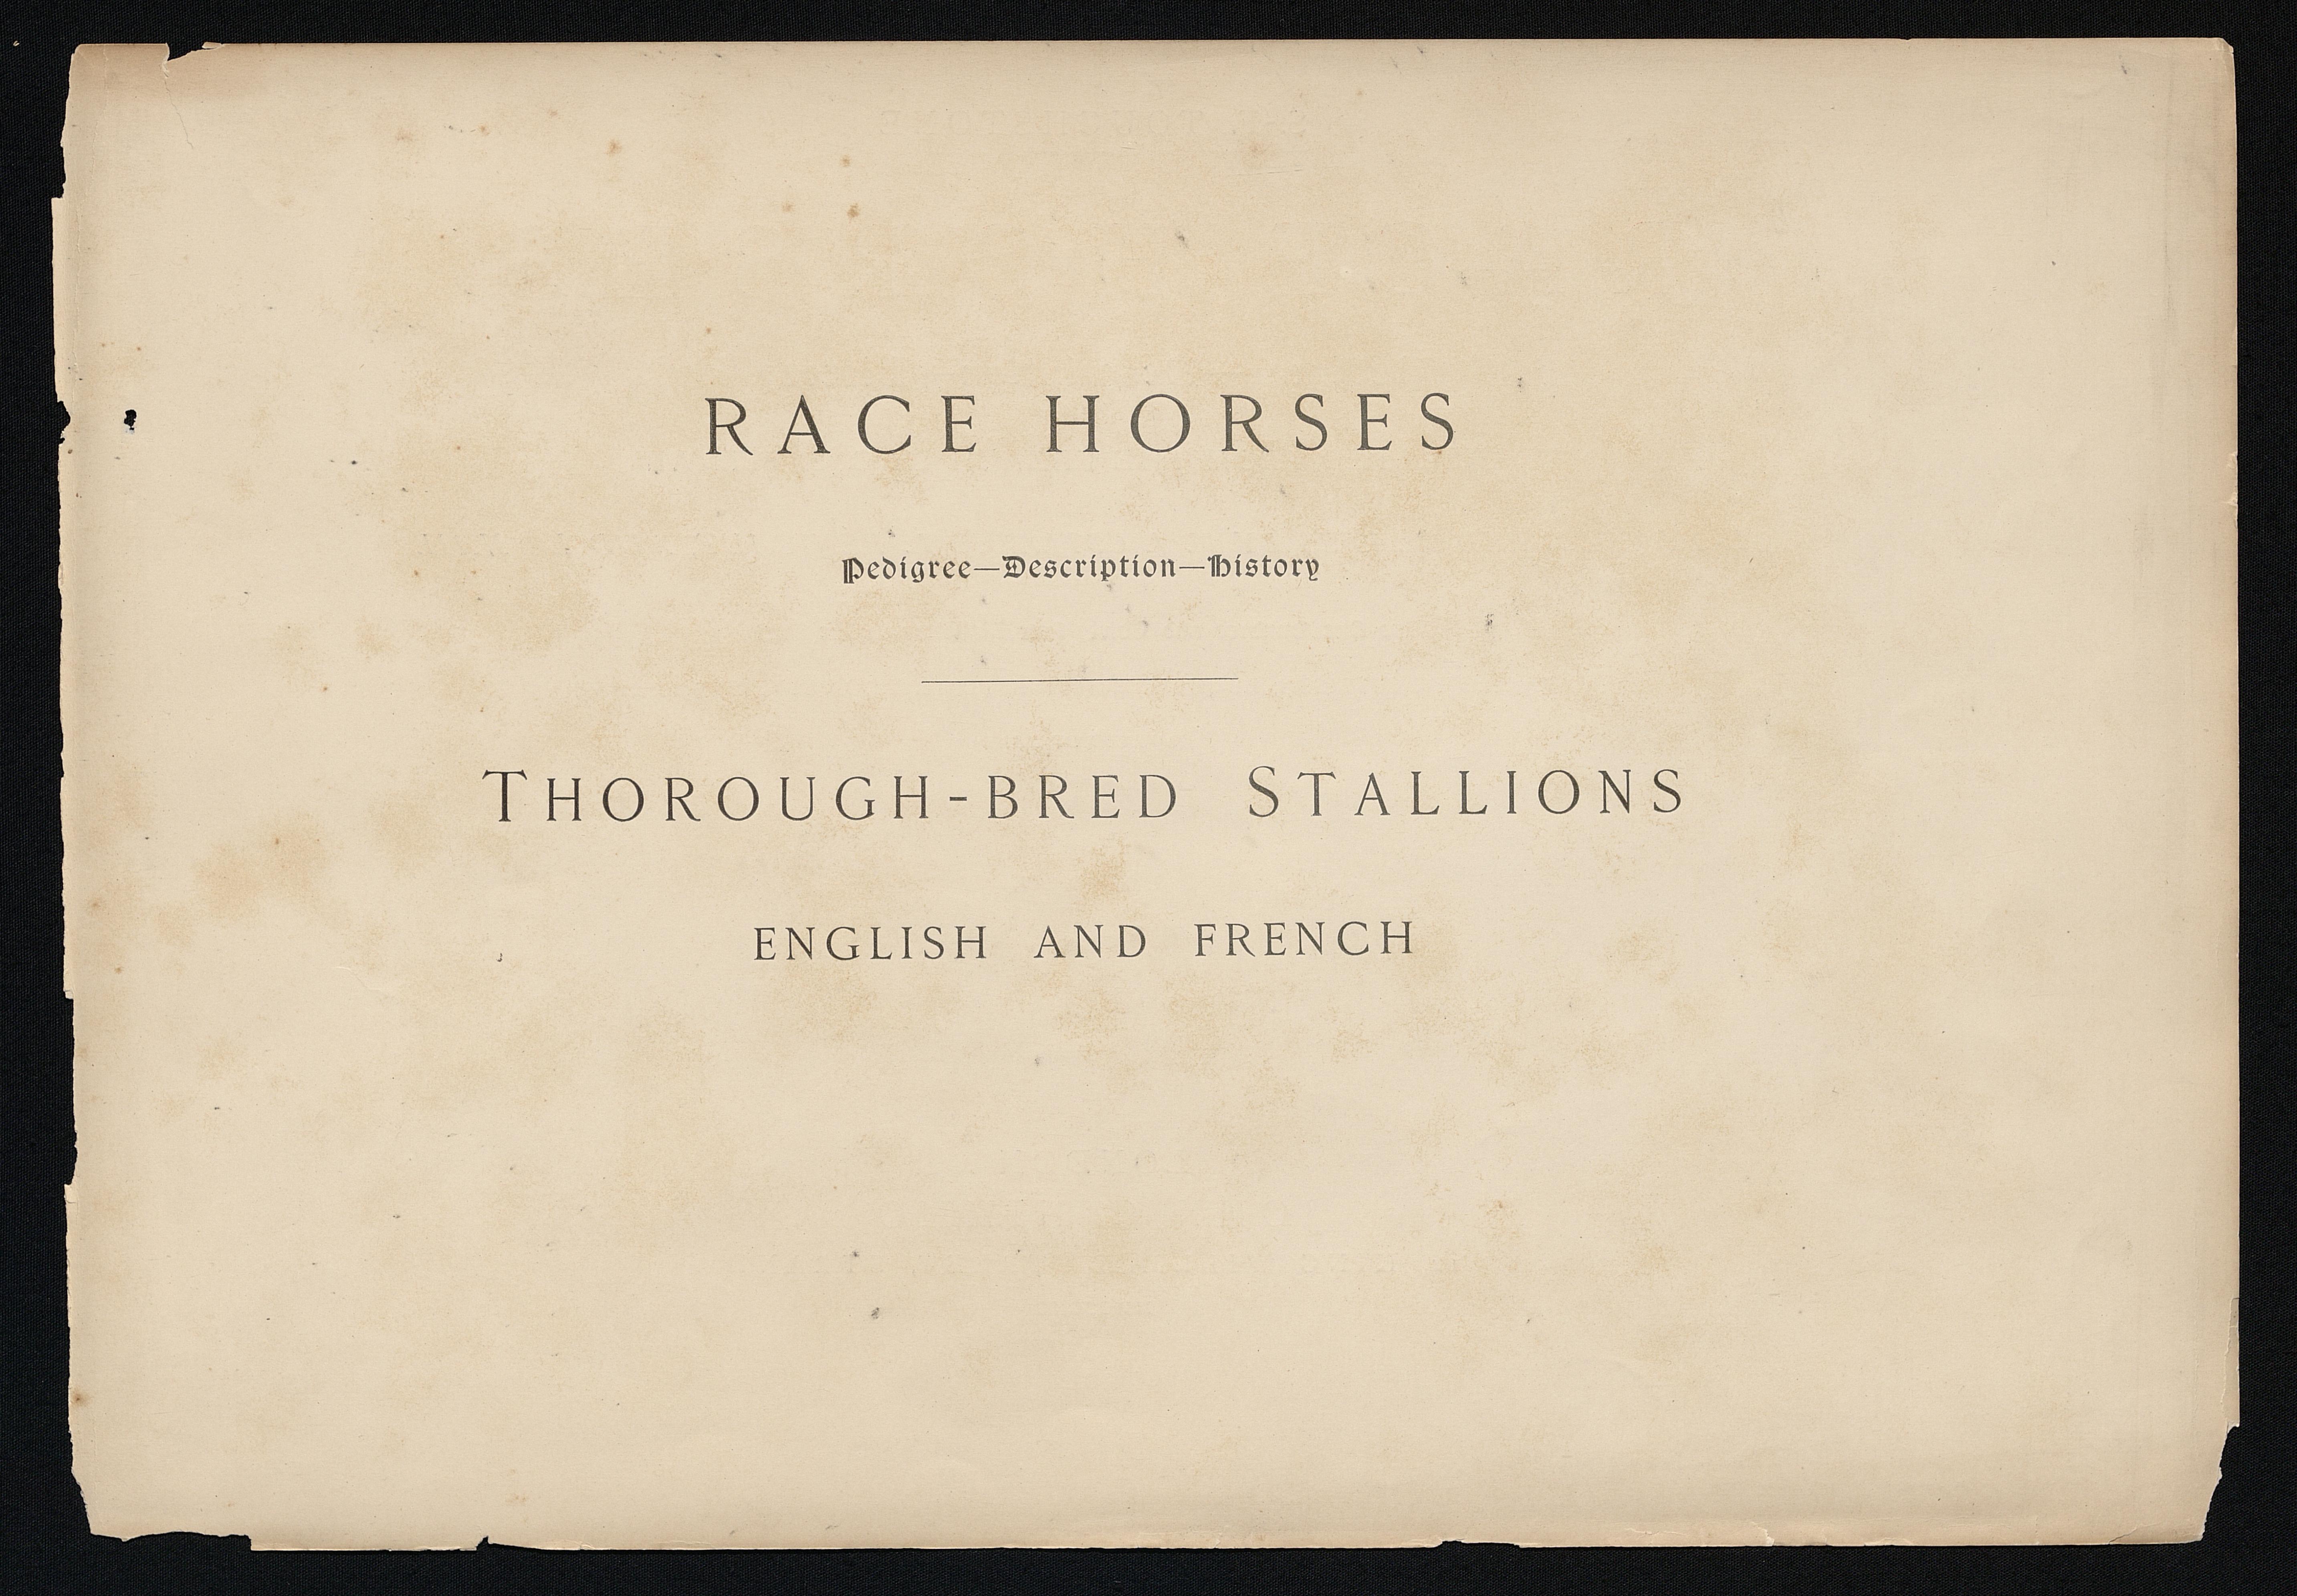 Race horses: Pedigree, Description, History